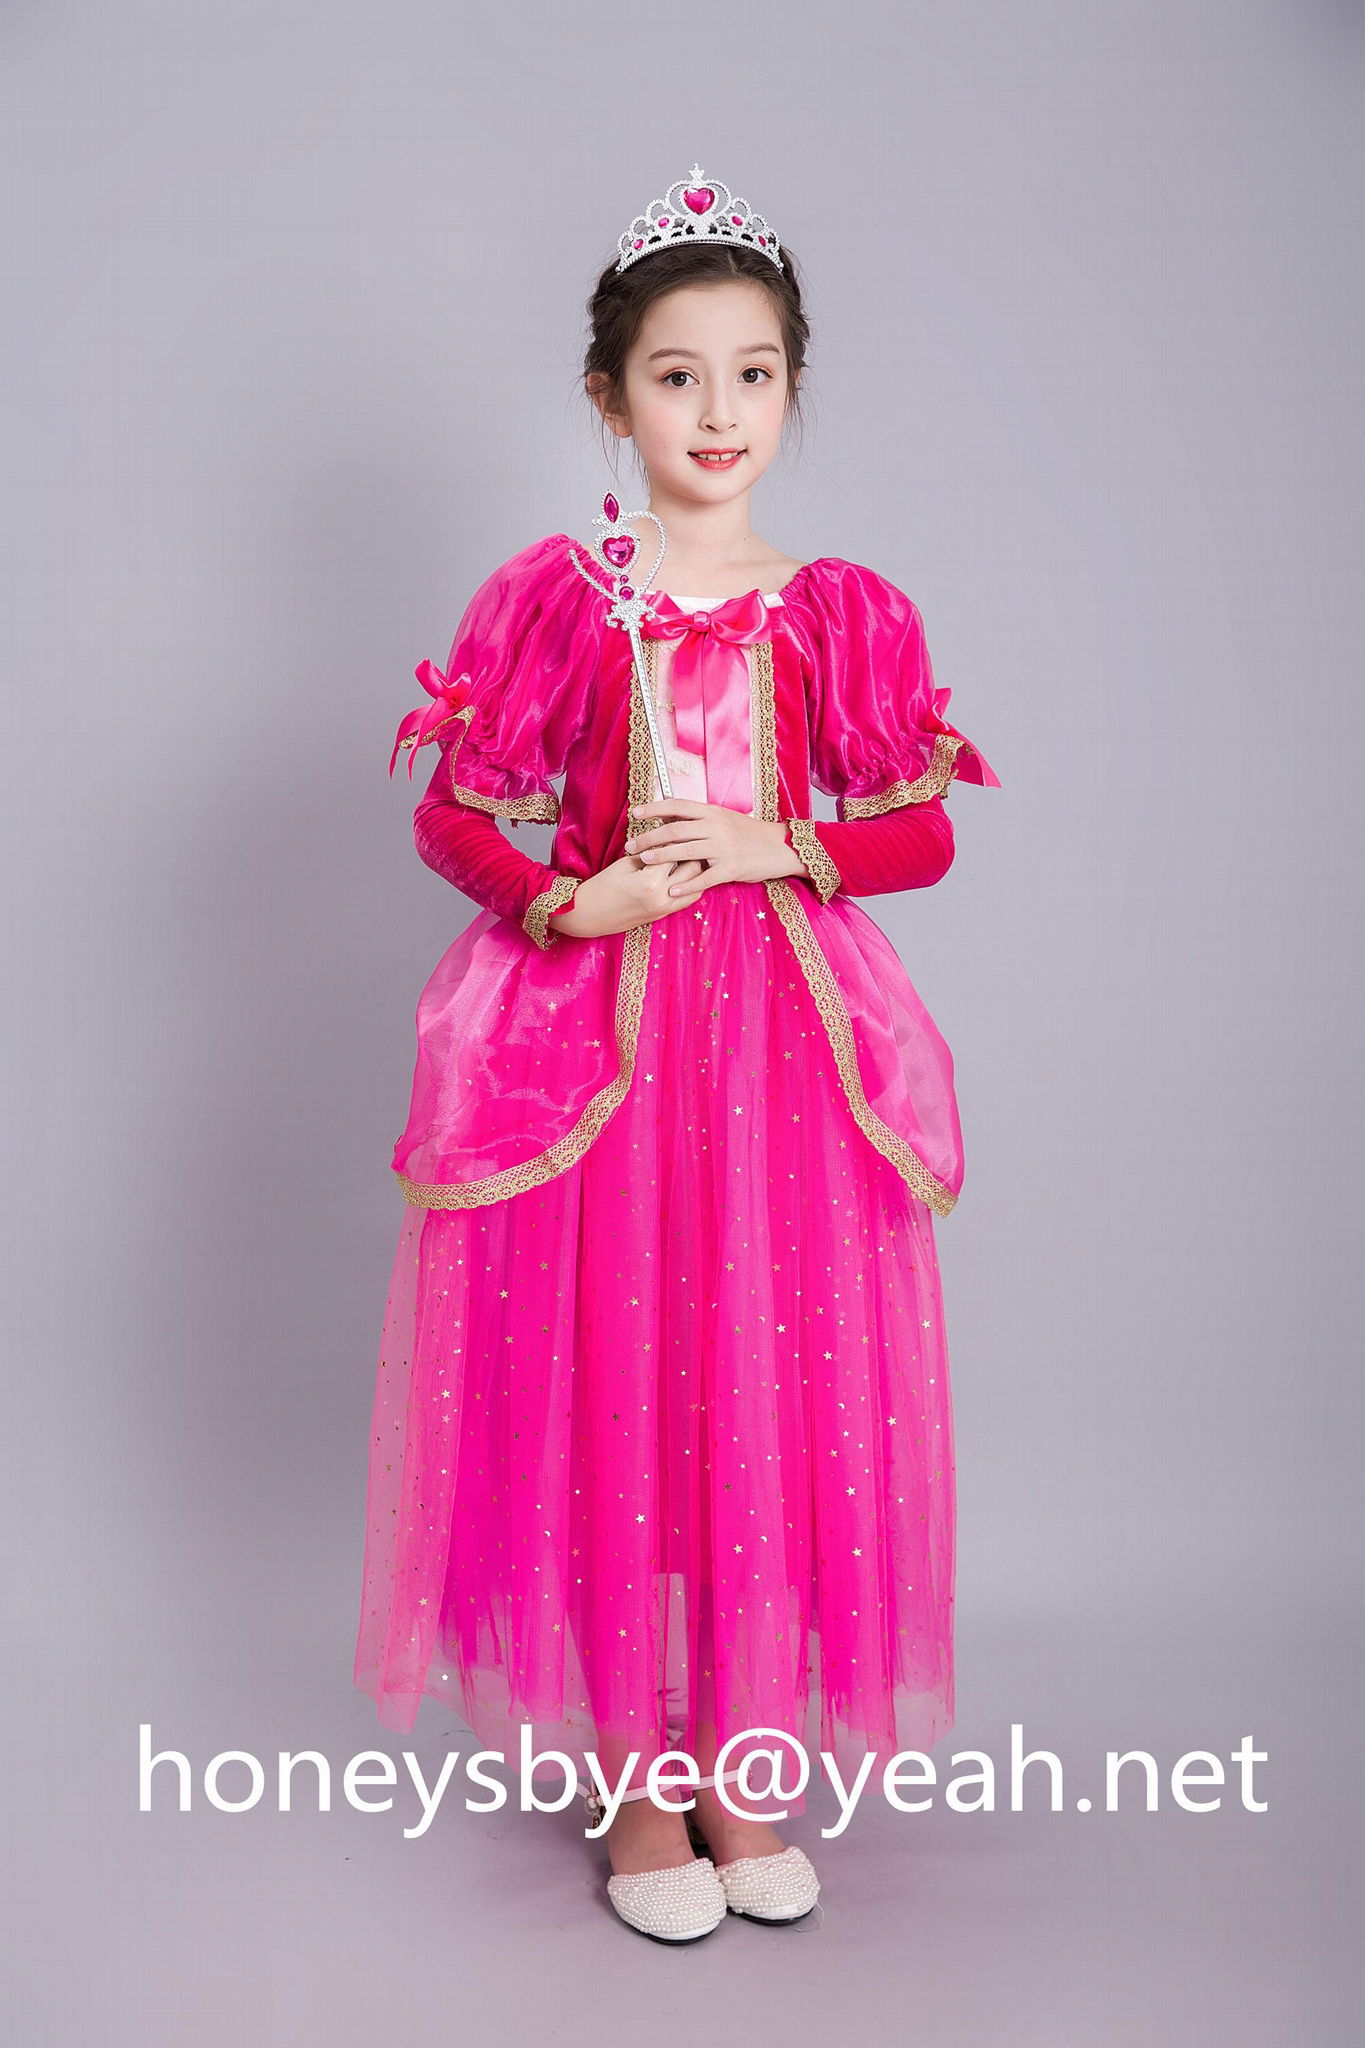 Beauty costumes Aurora Princess Dress Cosplay Costume Kids Dress Party Dress